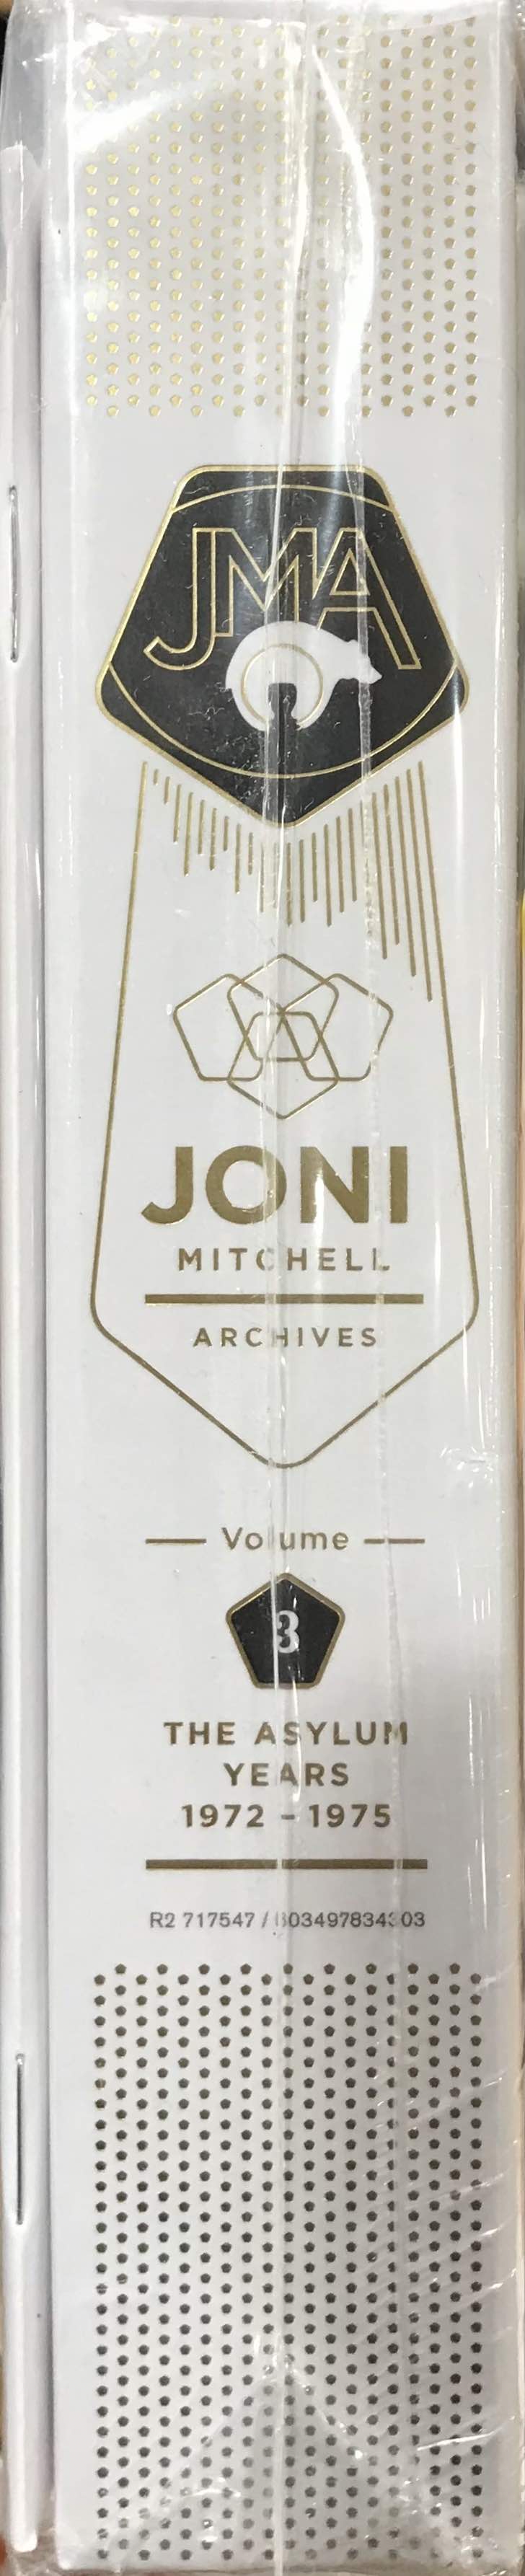 Joni Mitchell ‎– Archives – Volume 3: The Asylum Years (1972-1975)